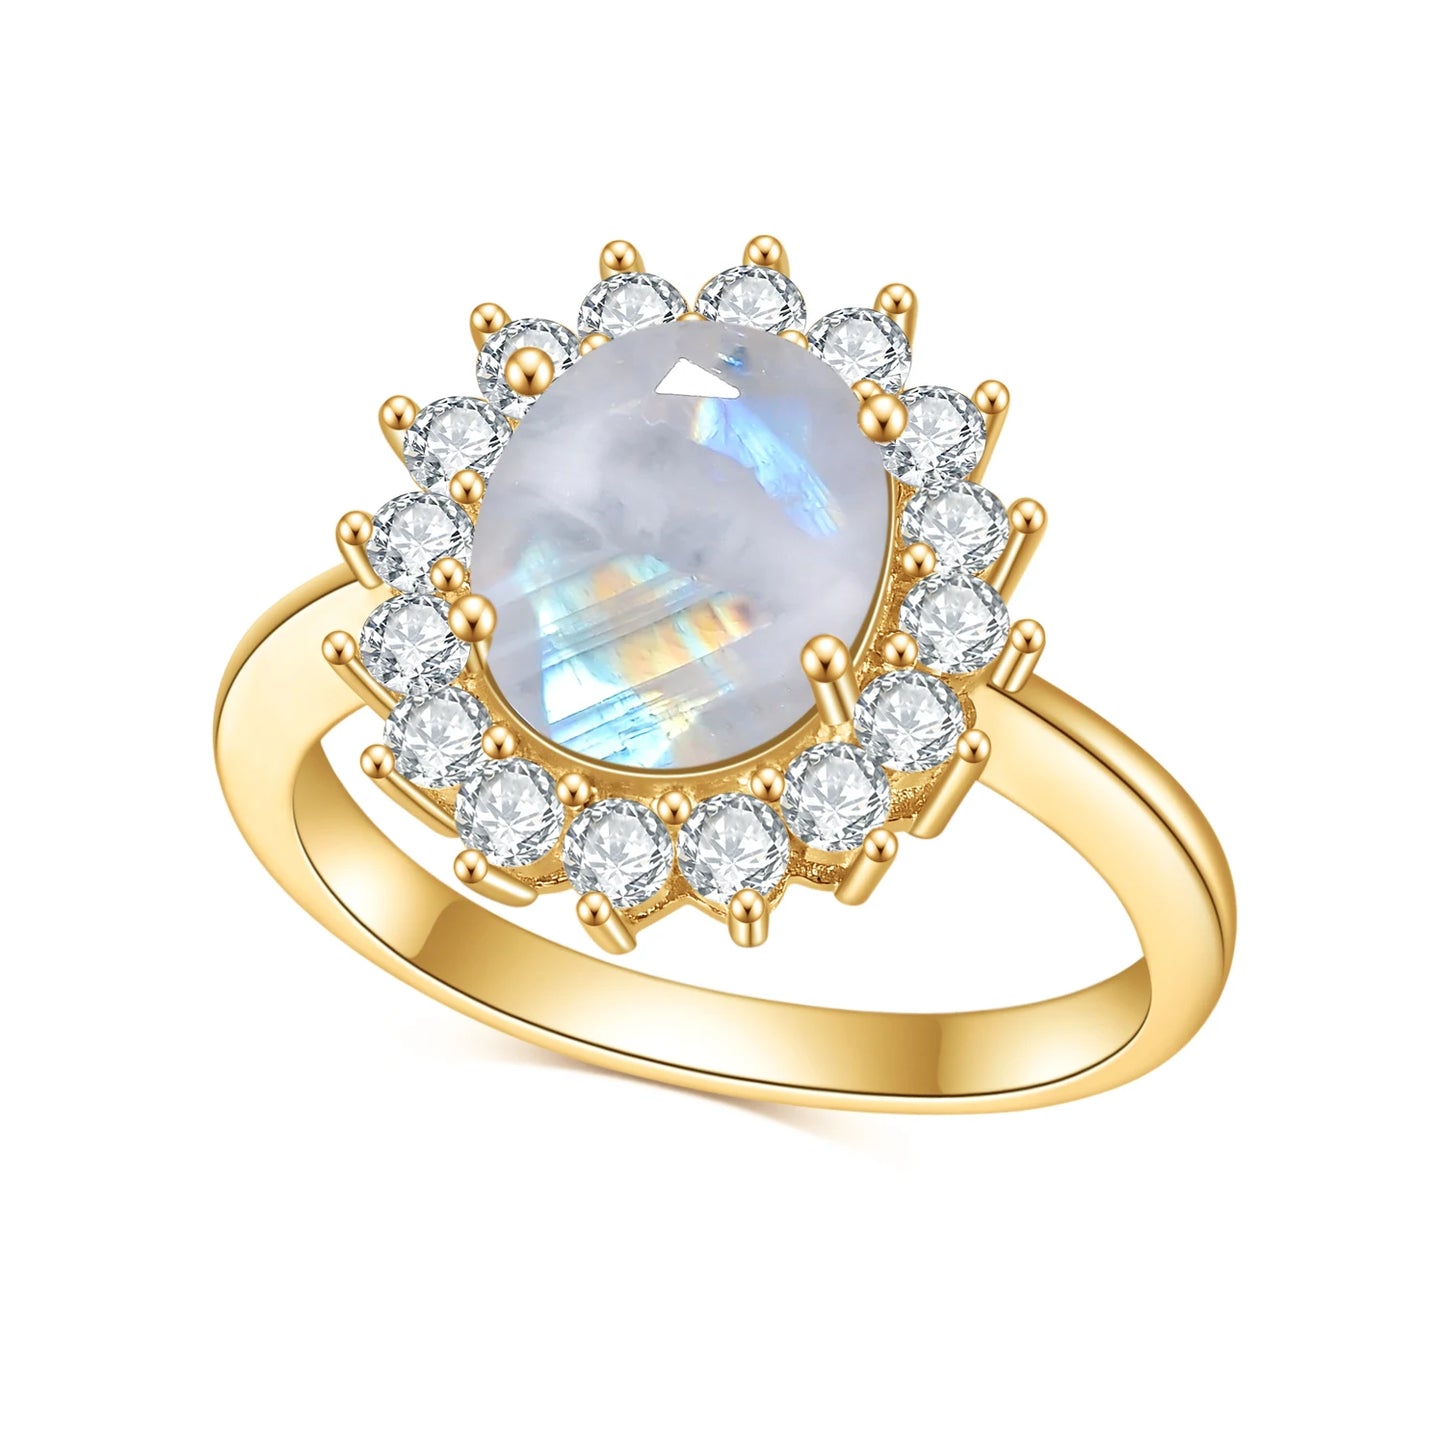 GEM'S BALLET Gold Engagement Ring Oval 8X10mm Natural Milky Blue Moonstone Gemstone Ring in 925 Sterling Silver Gift For Her 925 Sterling Silve Milky Blue Moonstone